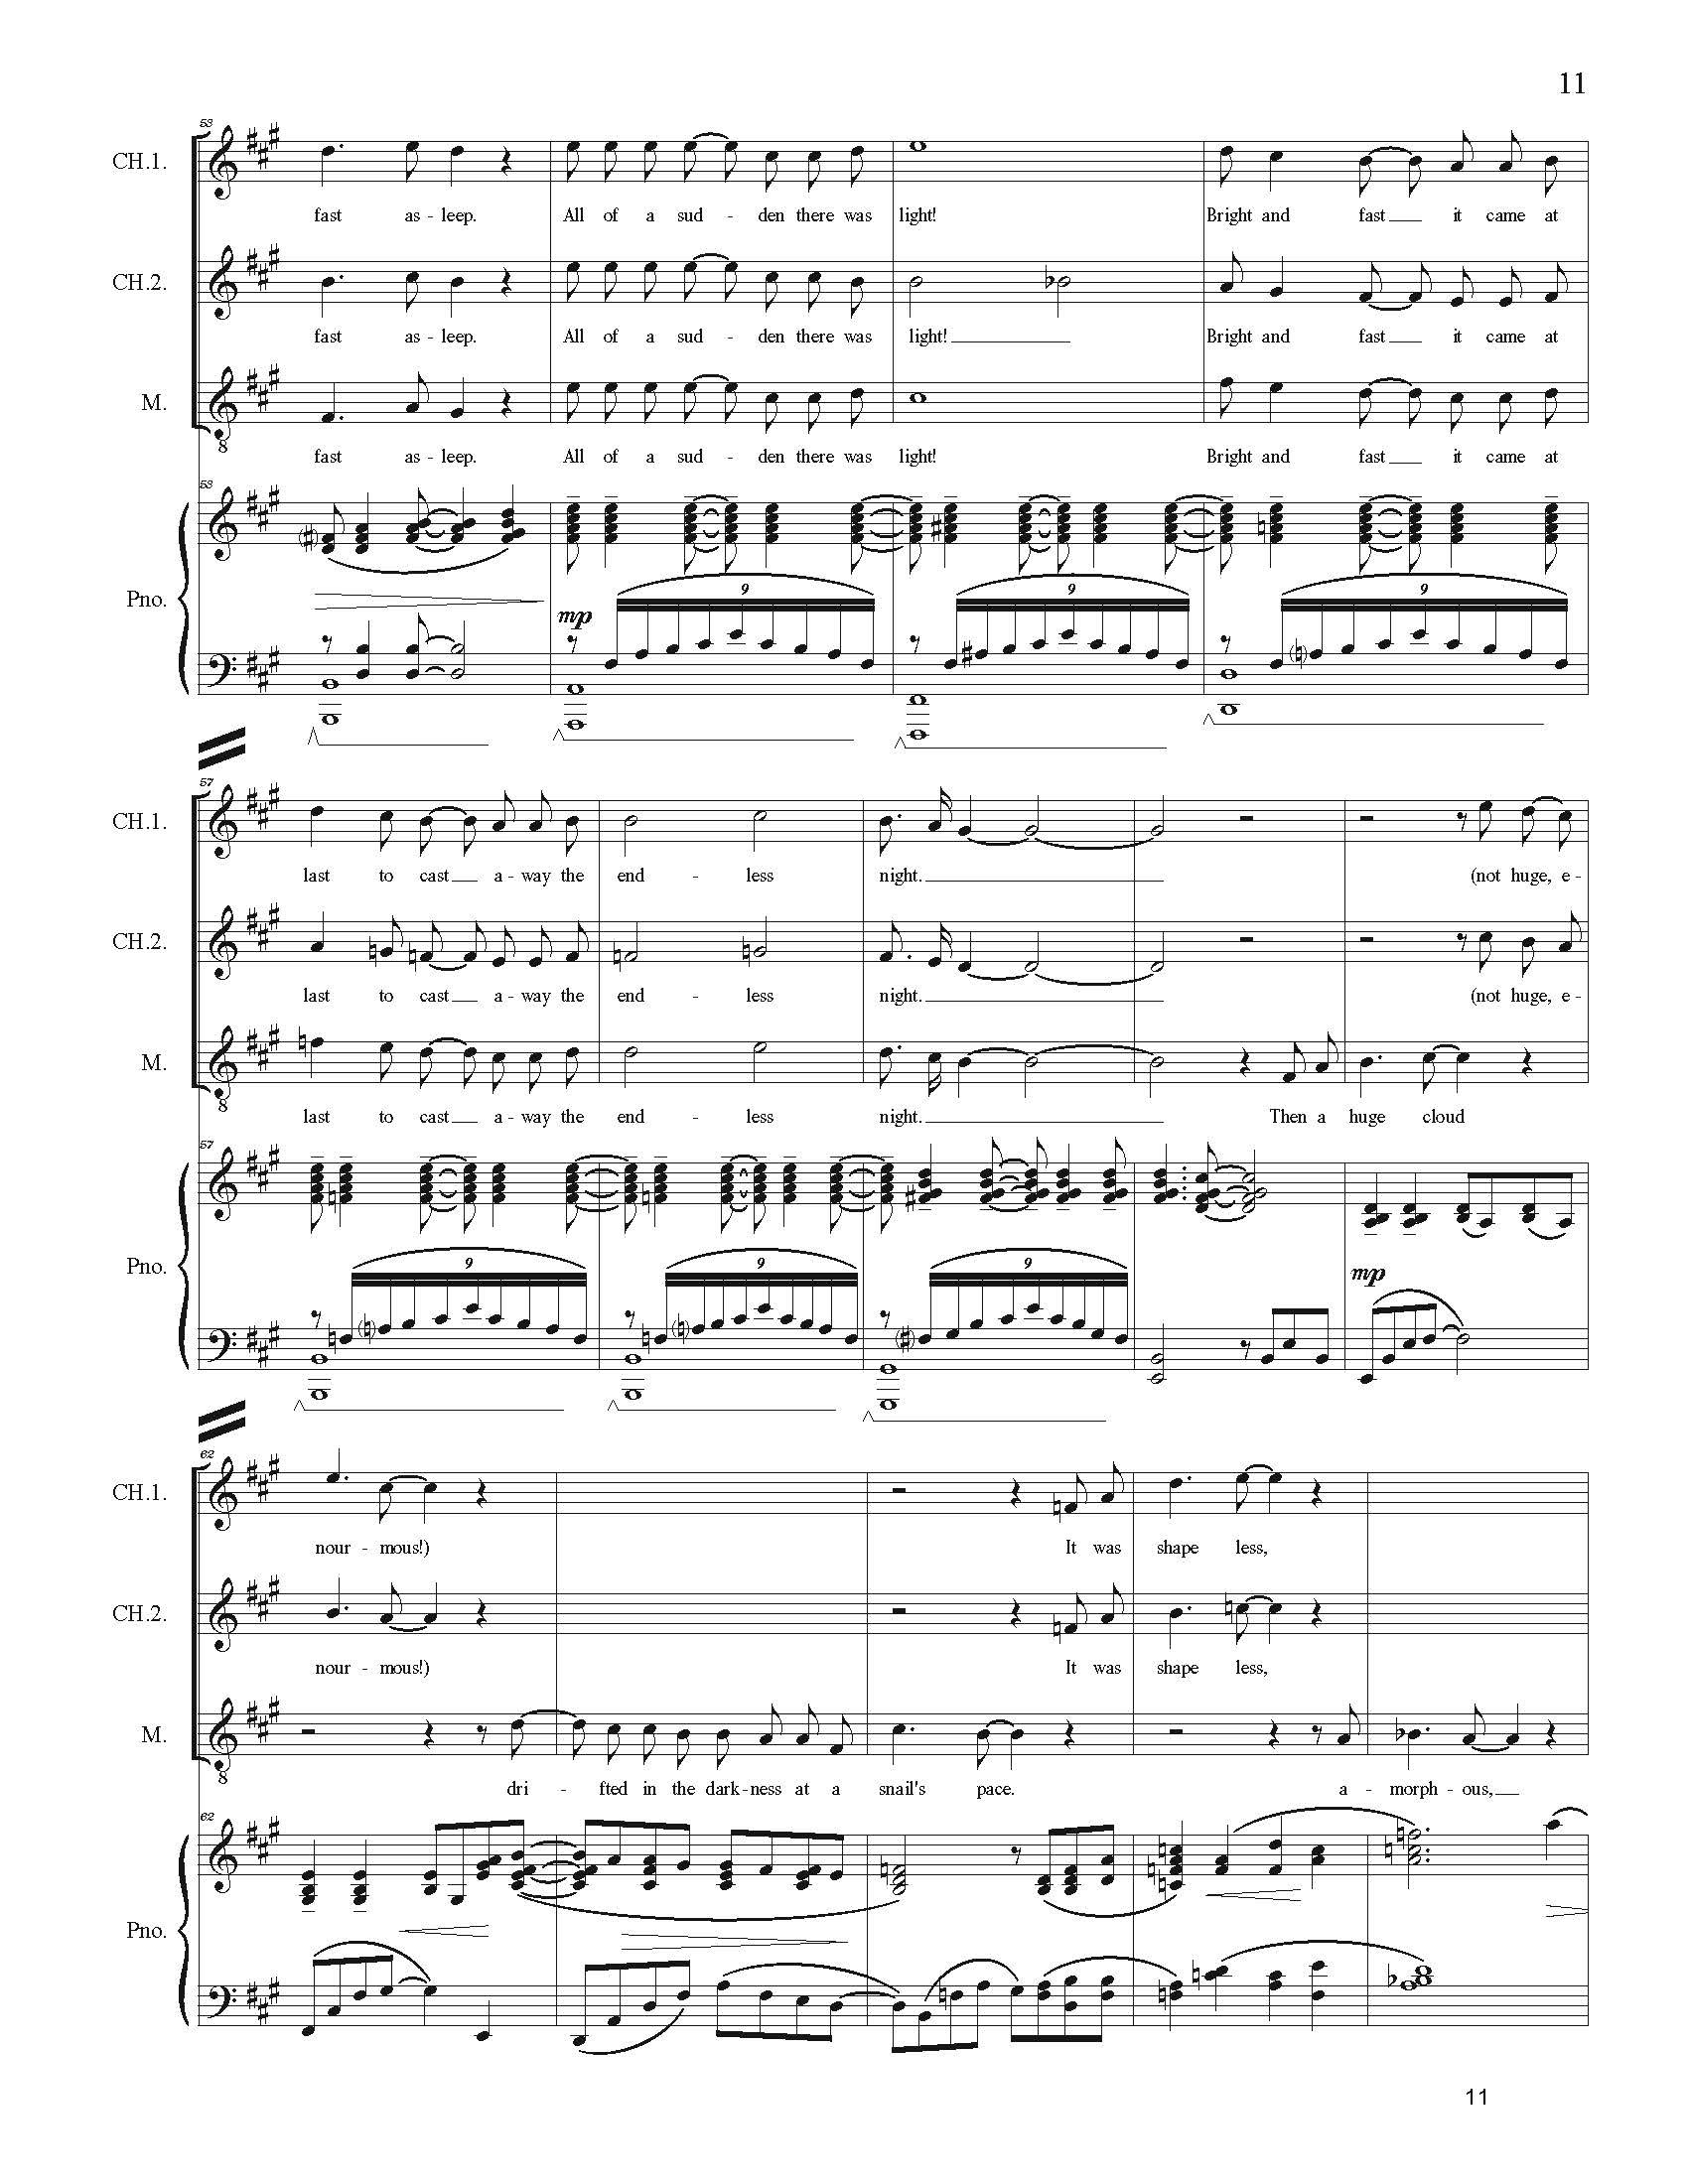 FULL PIANO VOCAL SCORE DRAFT 1 - Score_Page_011.jpg